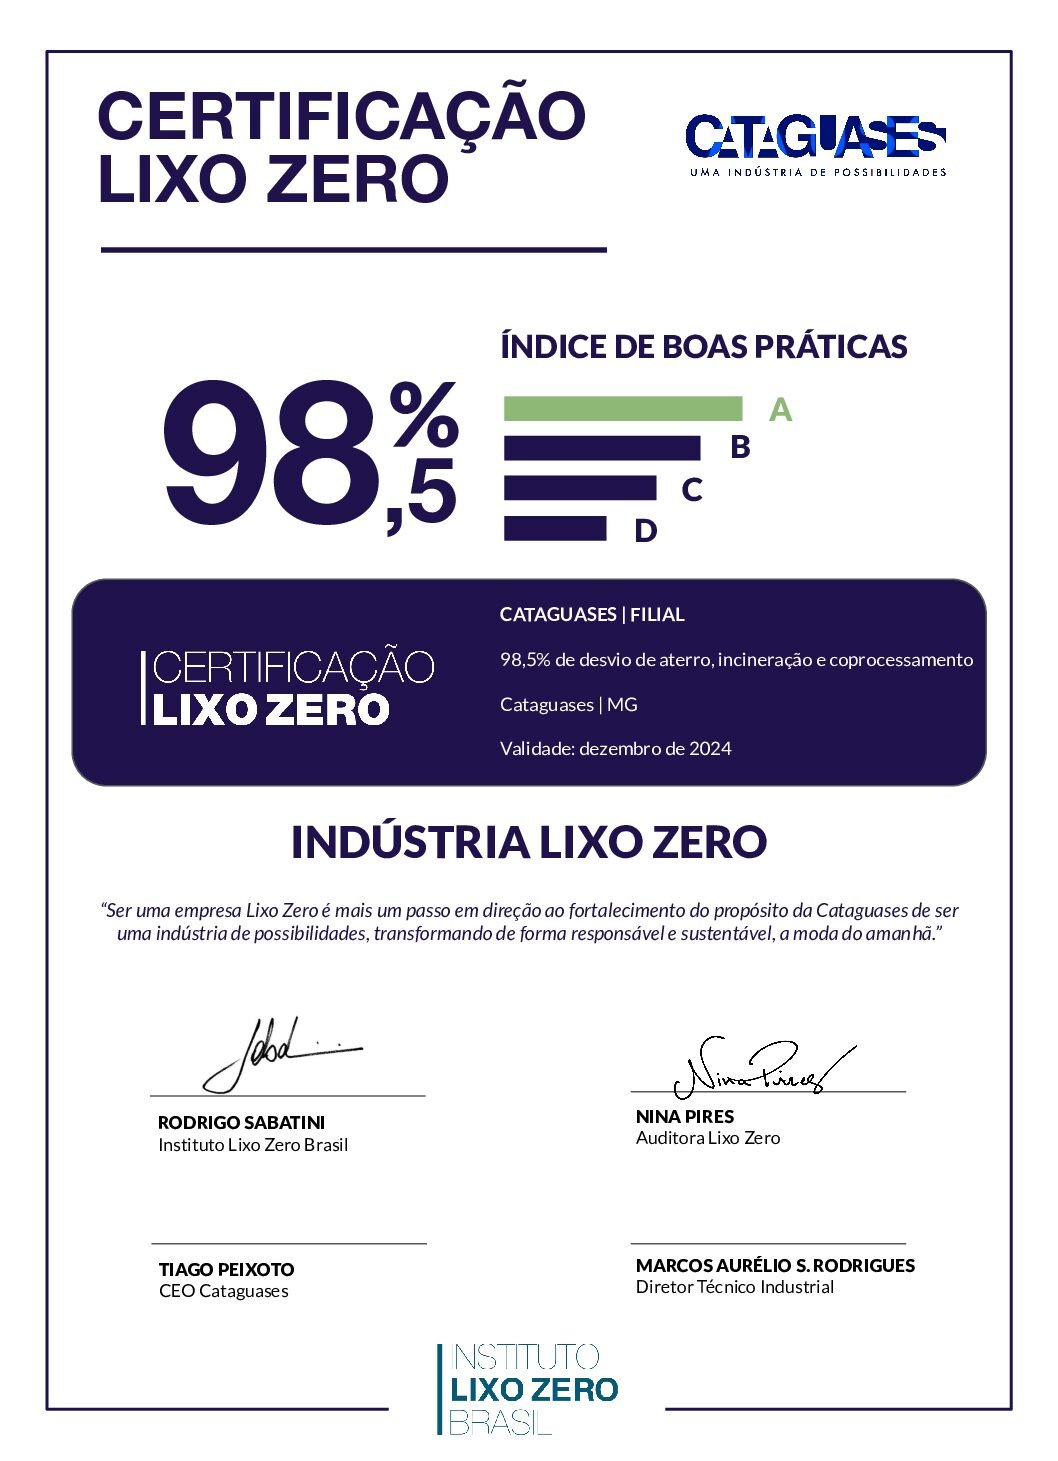 CertificaçãoLixoZero_Cataguases_Filial_MG_Dezembro_2023